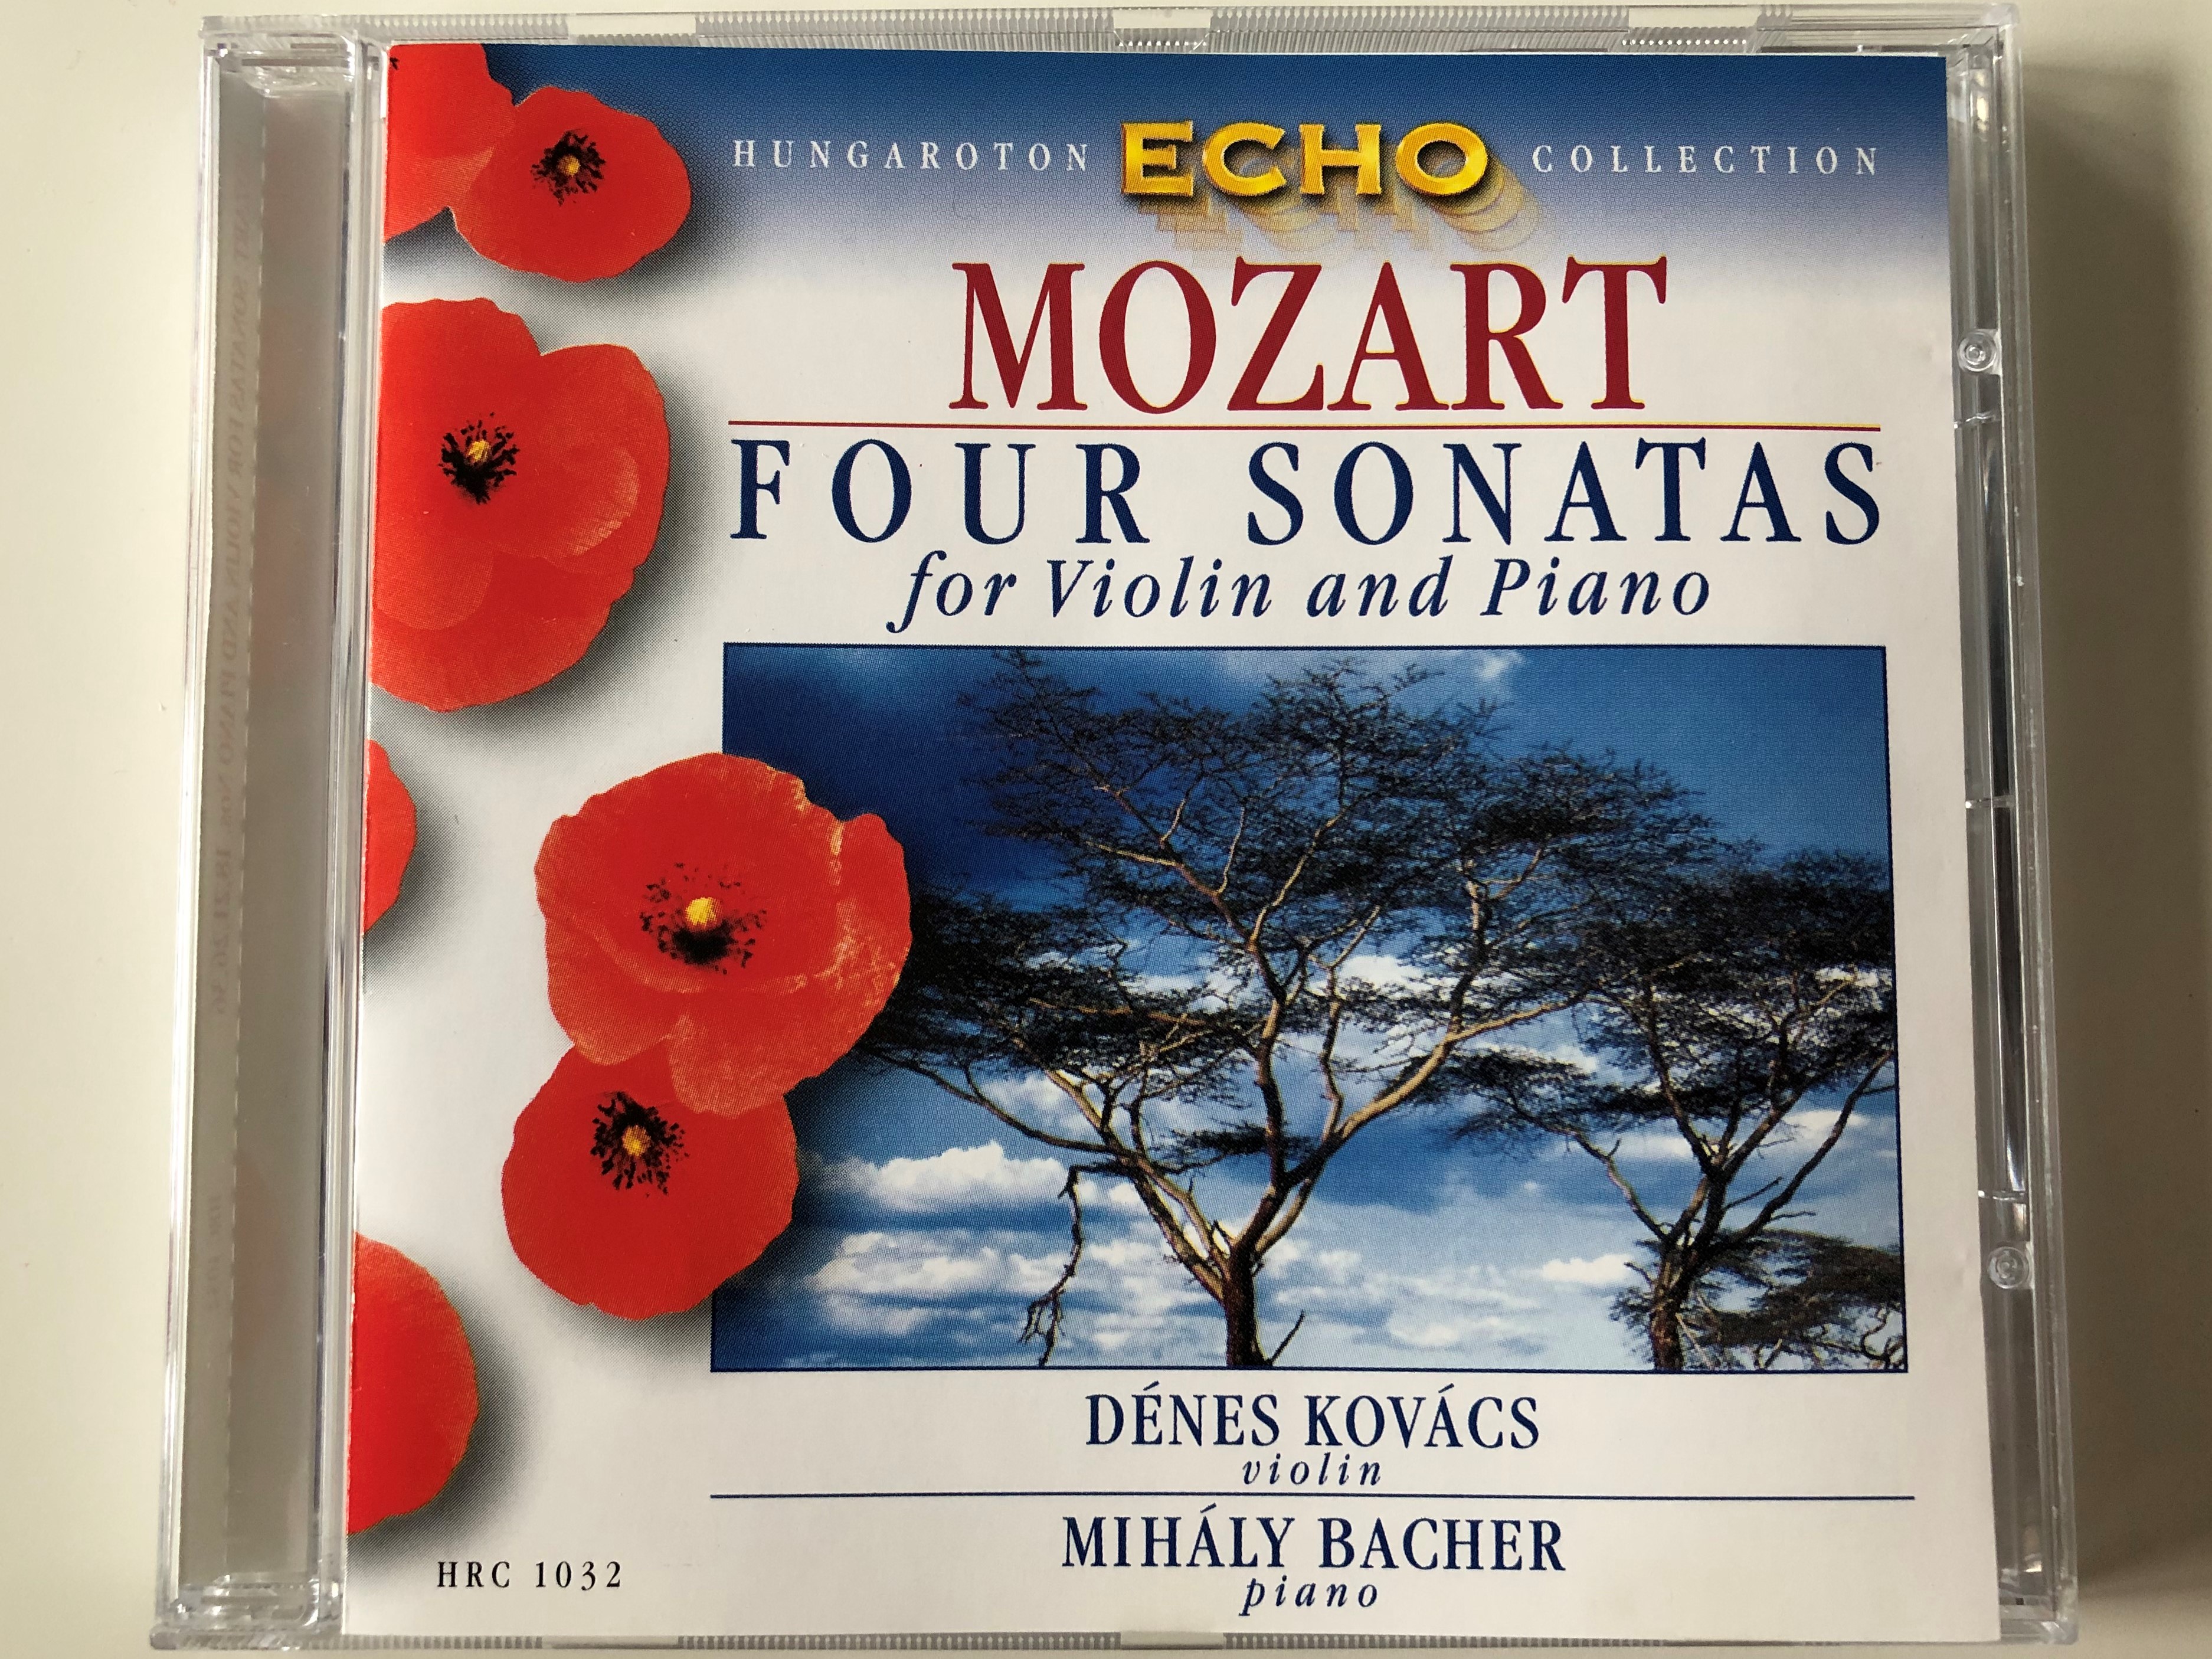 mozart-four-sonatas-for-violin-and-piano-d-nes-kov-cs-violin-mih-ly-b-cher-piano-hungaroton-classic-audio-cd-1999-stereo-hrc-1032-1-.jpg